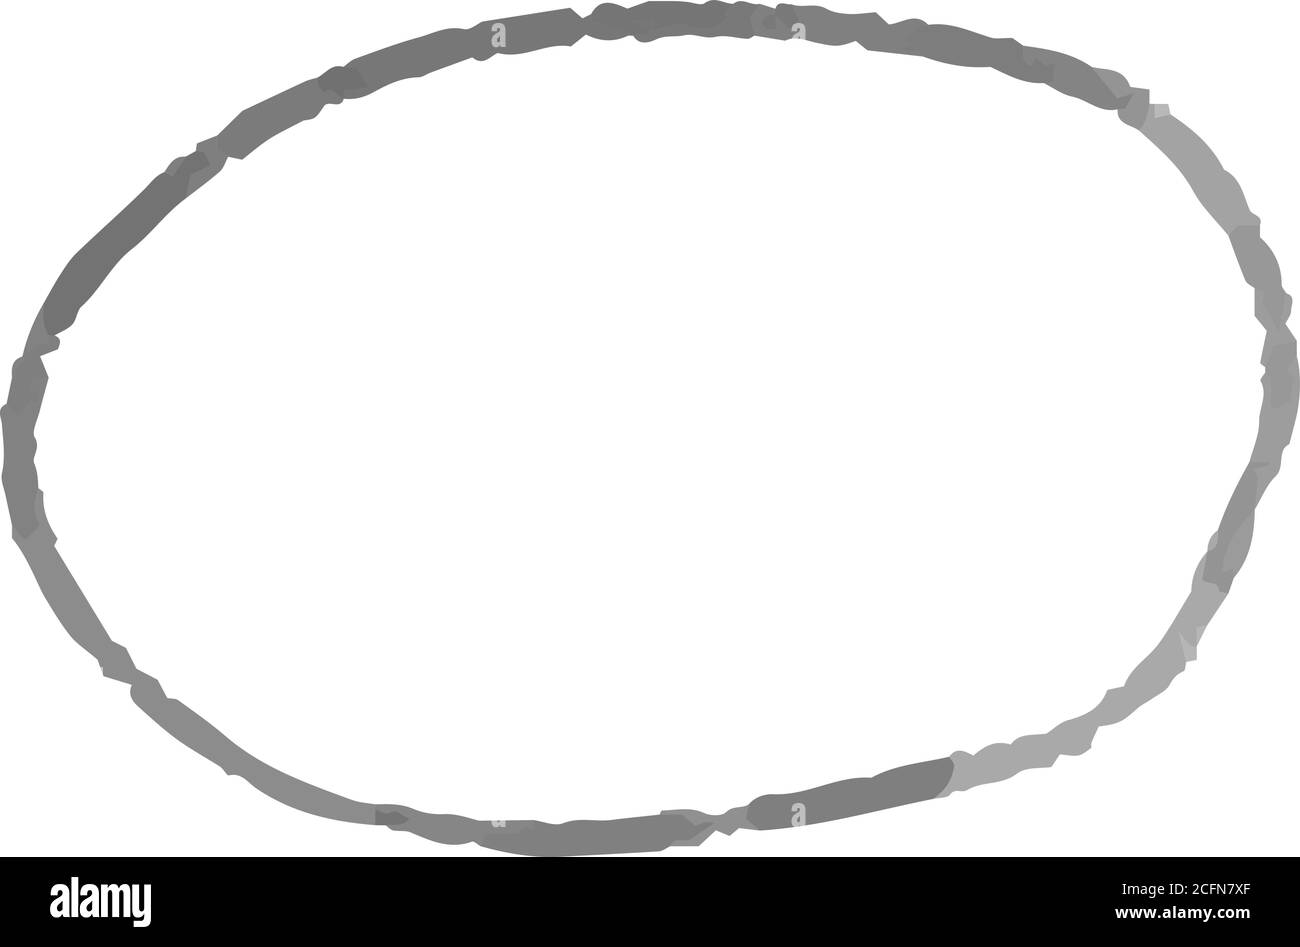 Dies ist eine Illustration des horizontalen Kreises mit monochromem Aquarell Textur Stock Vektor